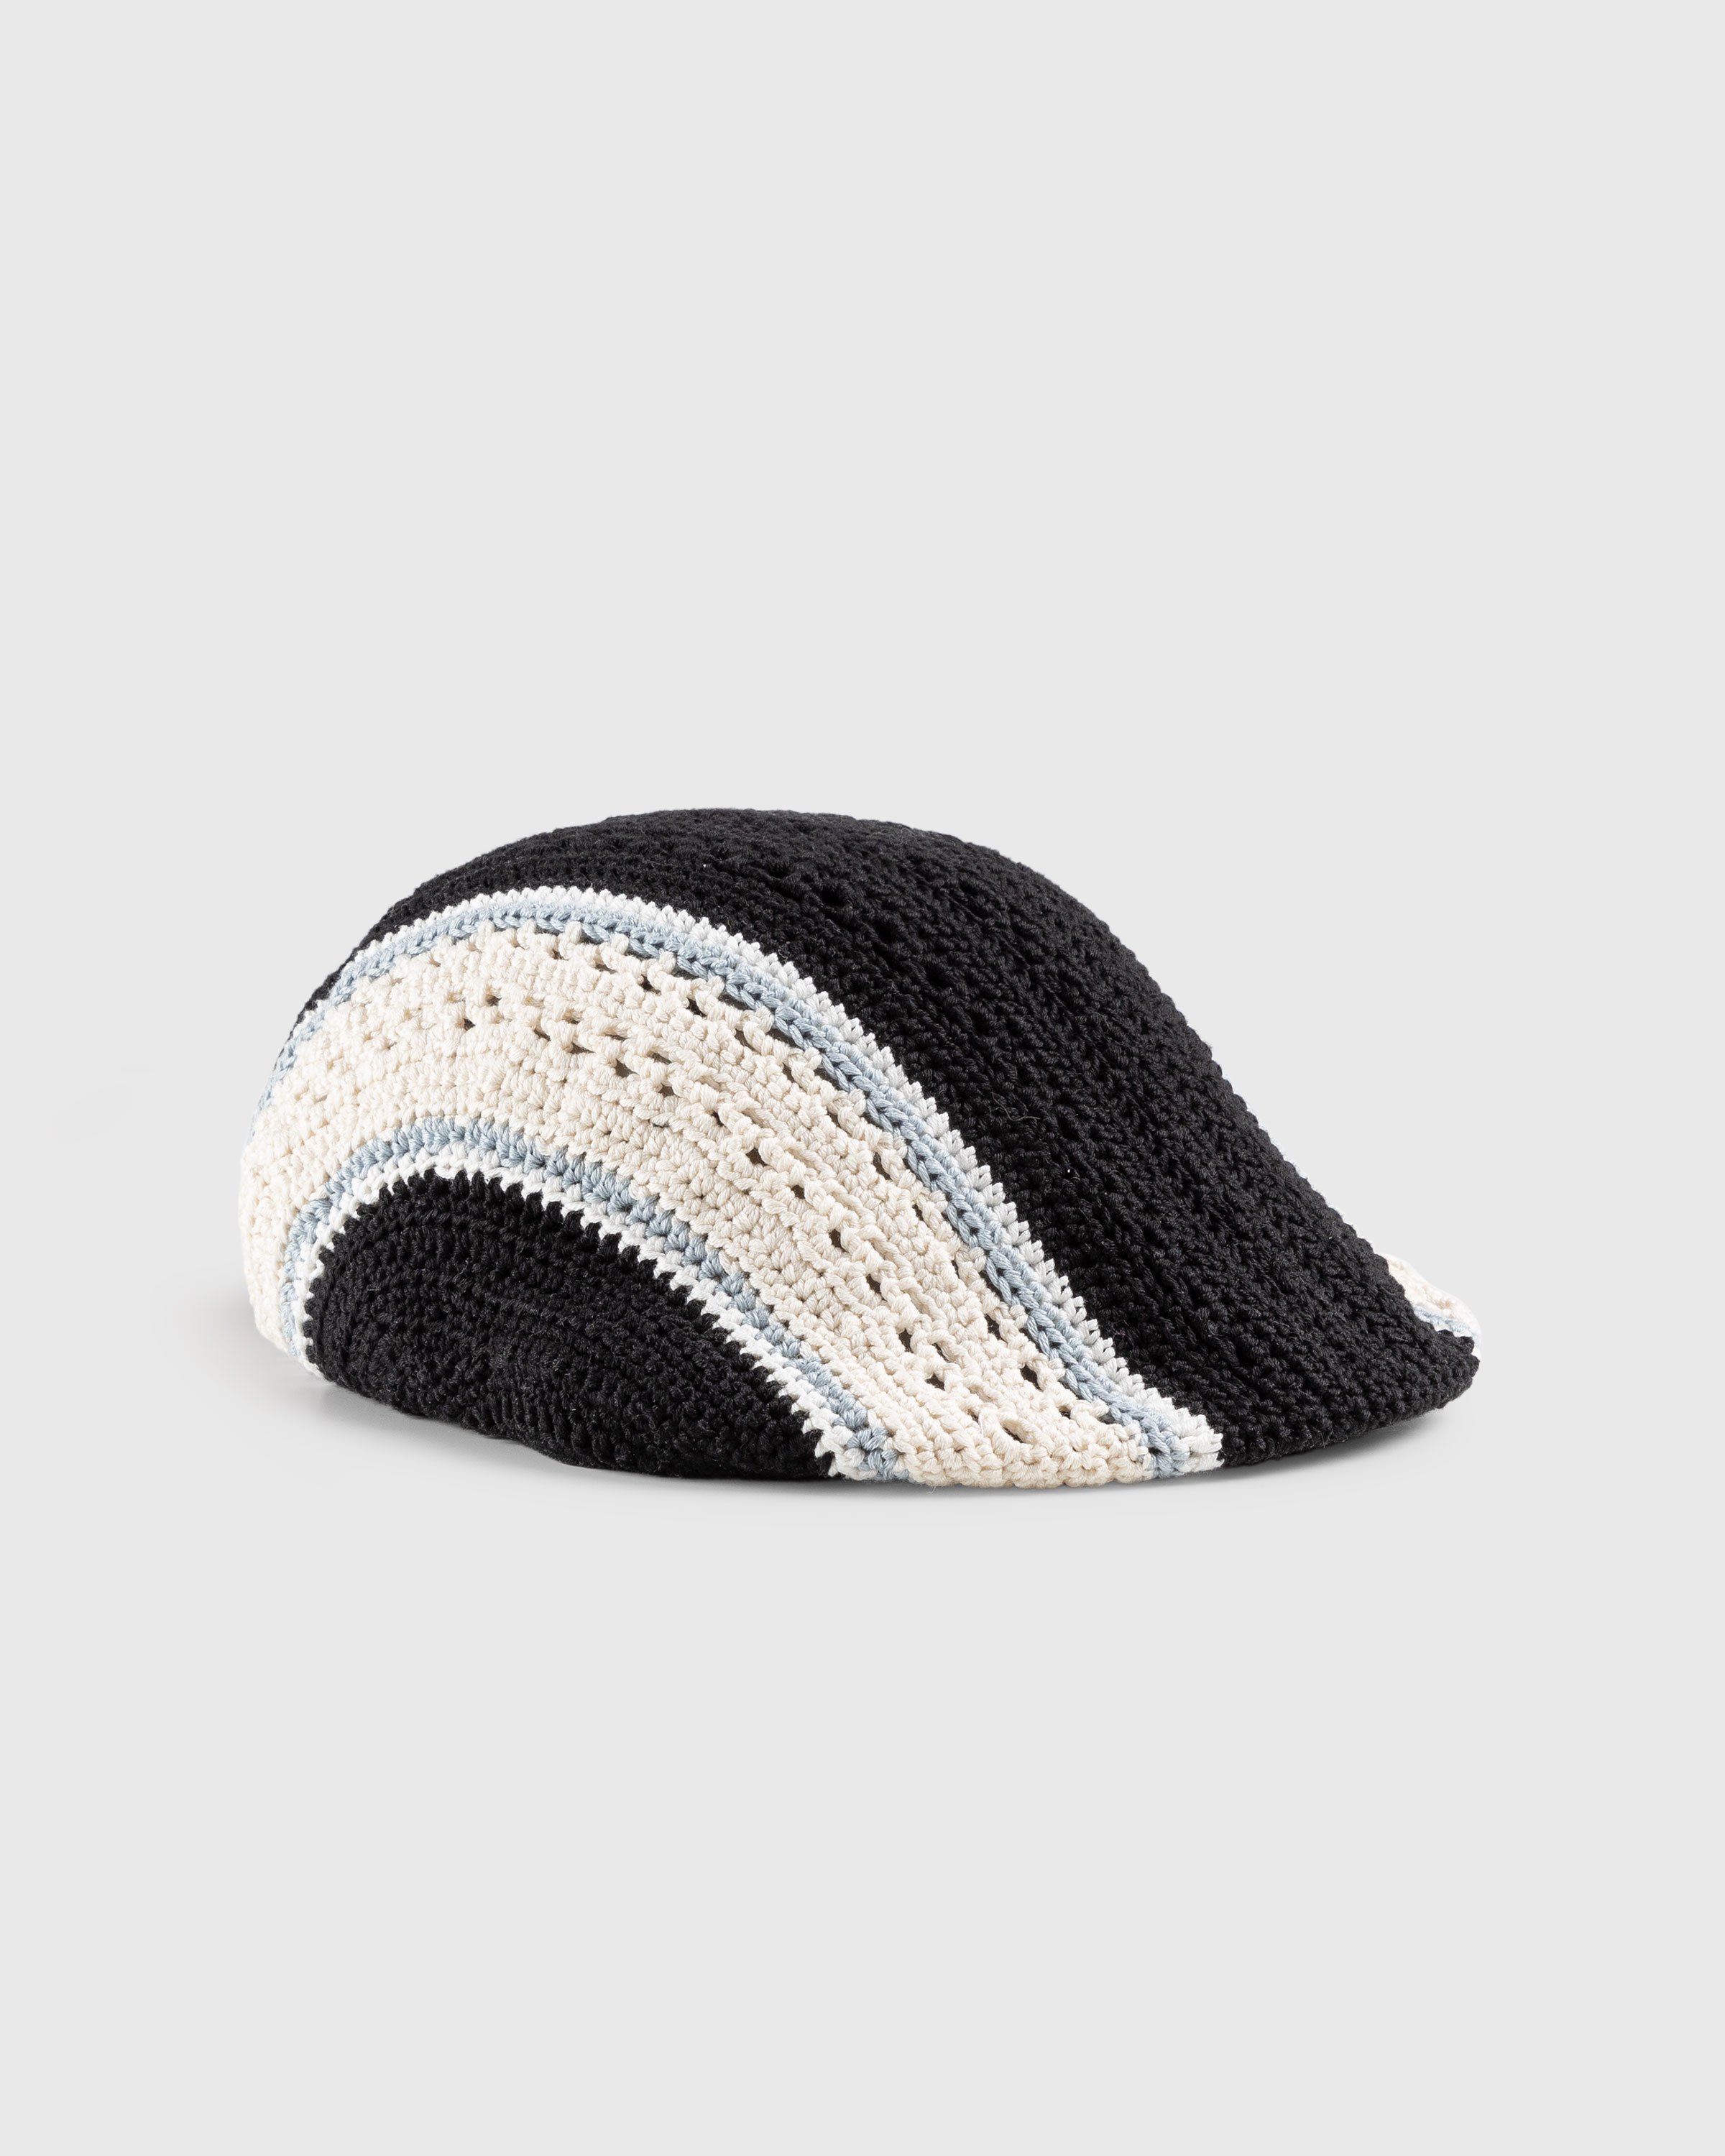 SSU - Crochet Flat Hat Black/Ivory - Accessories - Black - Image 1